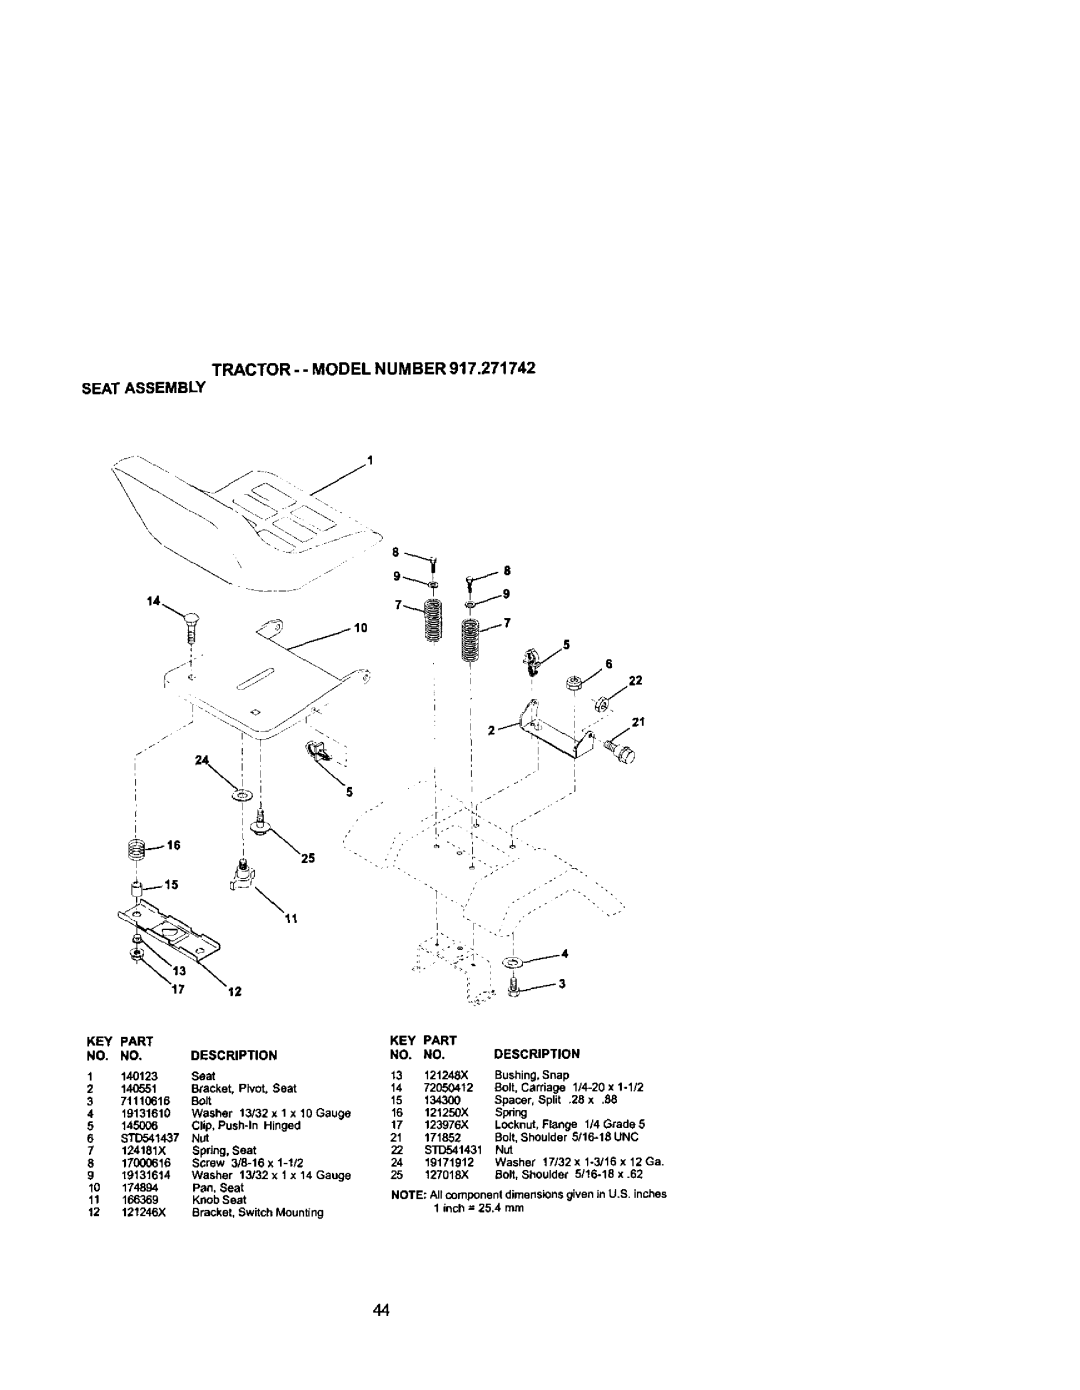 Craftsman 917.271742 owner manual Tractor- - Model Number Seat Assembly, Key Part, Description 